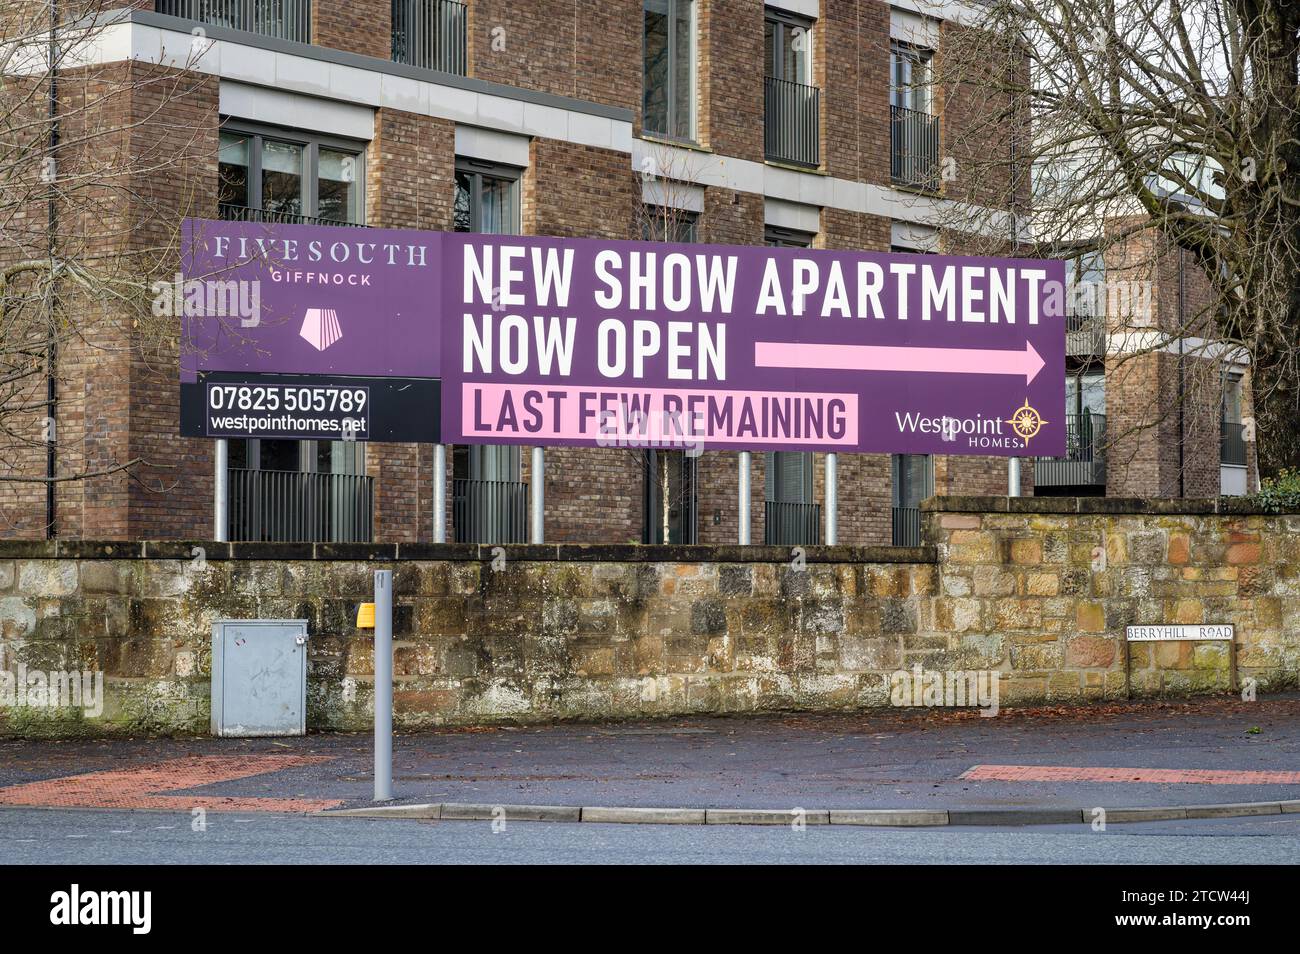 New Show Apartment sign, Berryhill Road, Giffnock, Glasgow, Scotland, UK, Europe Stock Photo